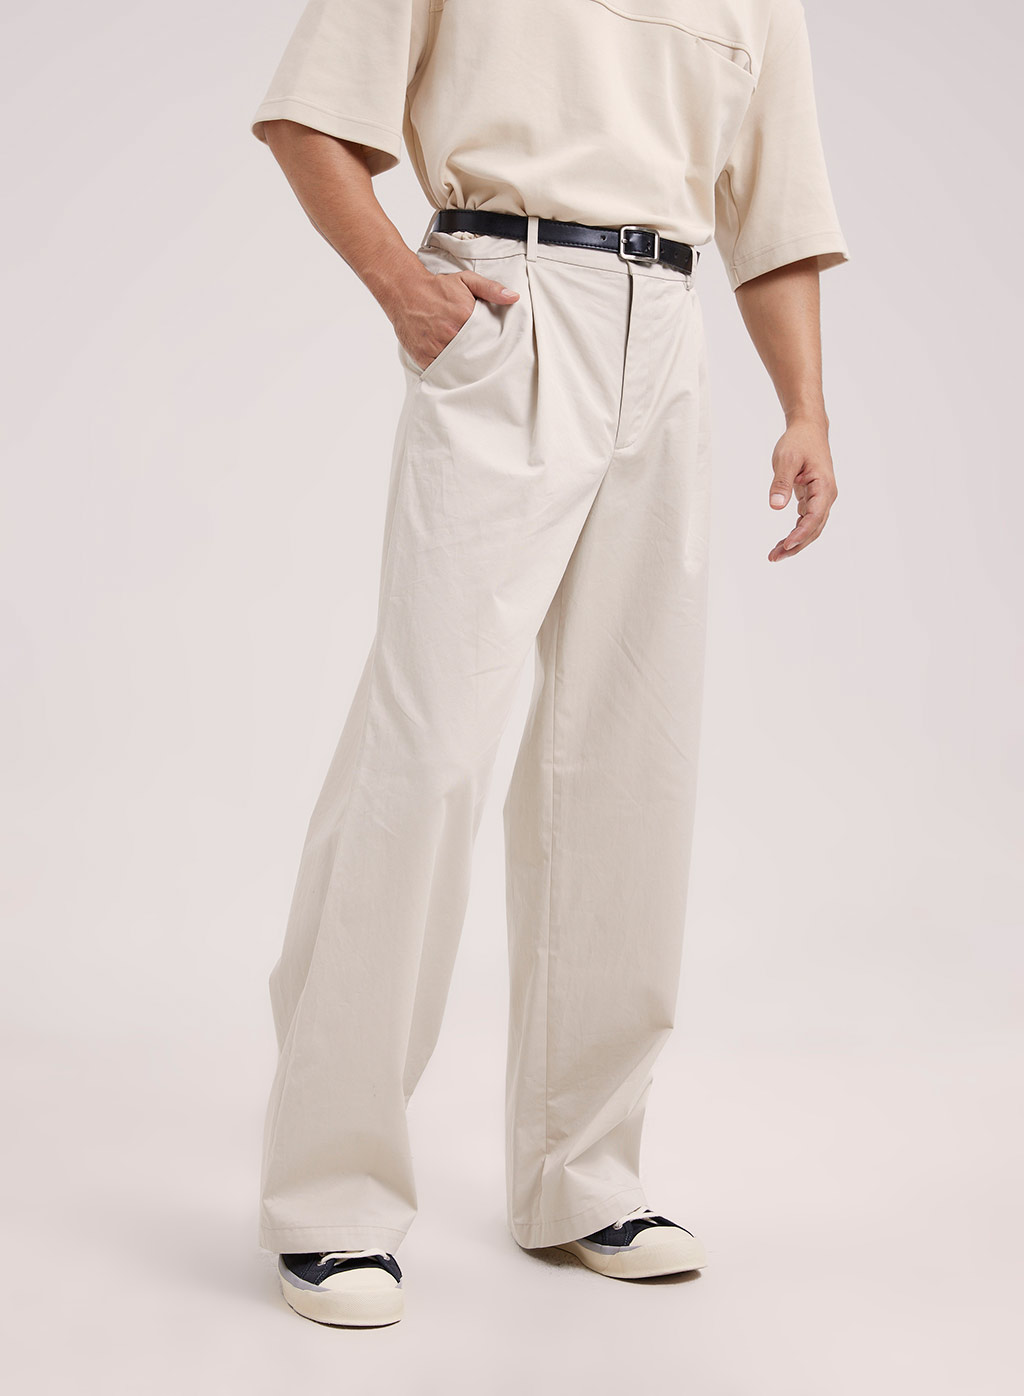 15 Best Outfit Ideas: How to Wear Linen Pants for Women - FMag.com